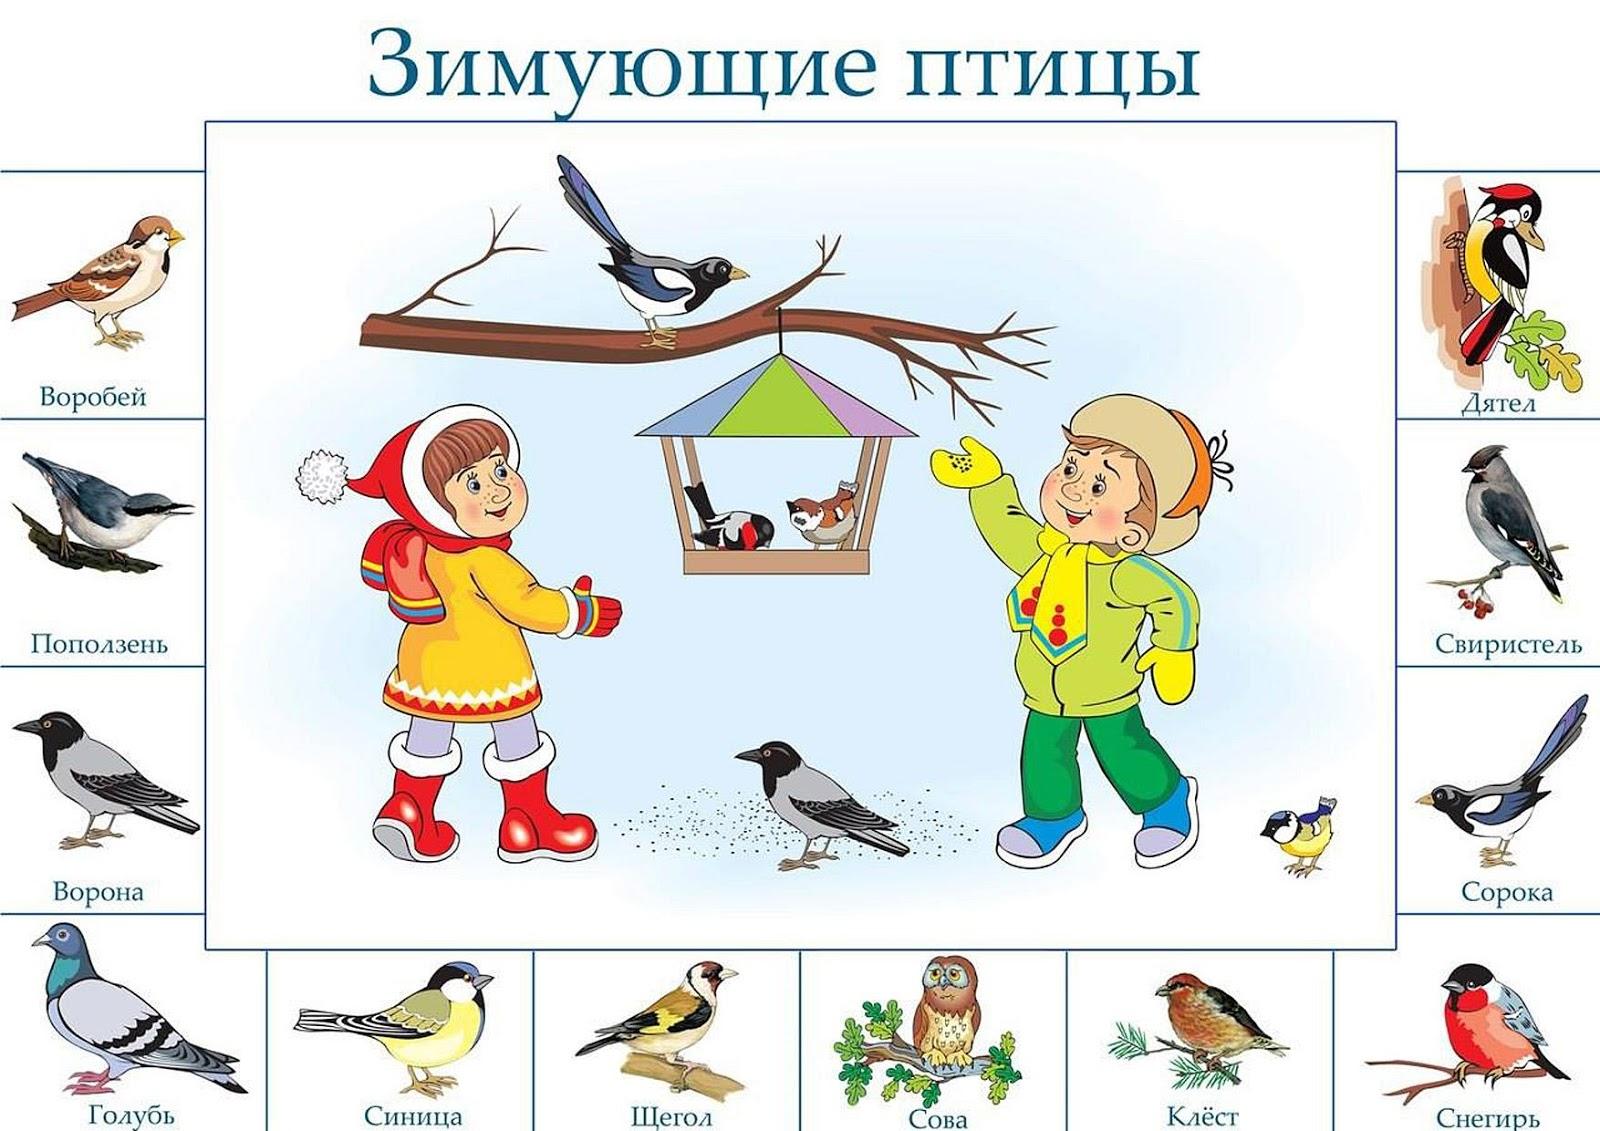 Зимующие птицы Урала 2 класс